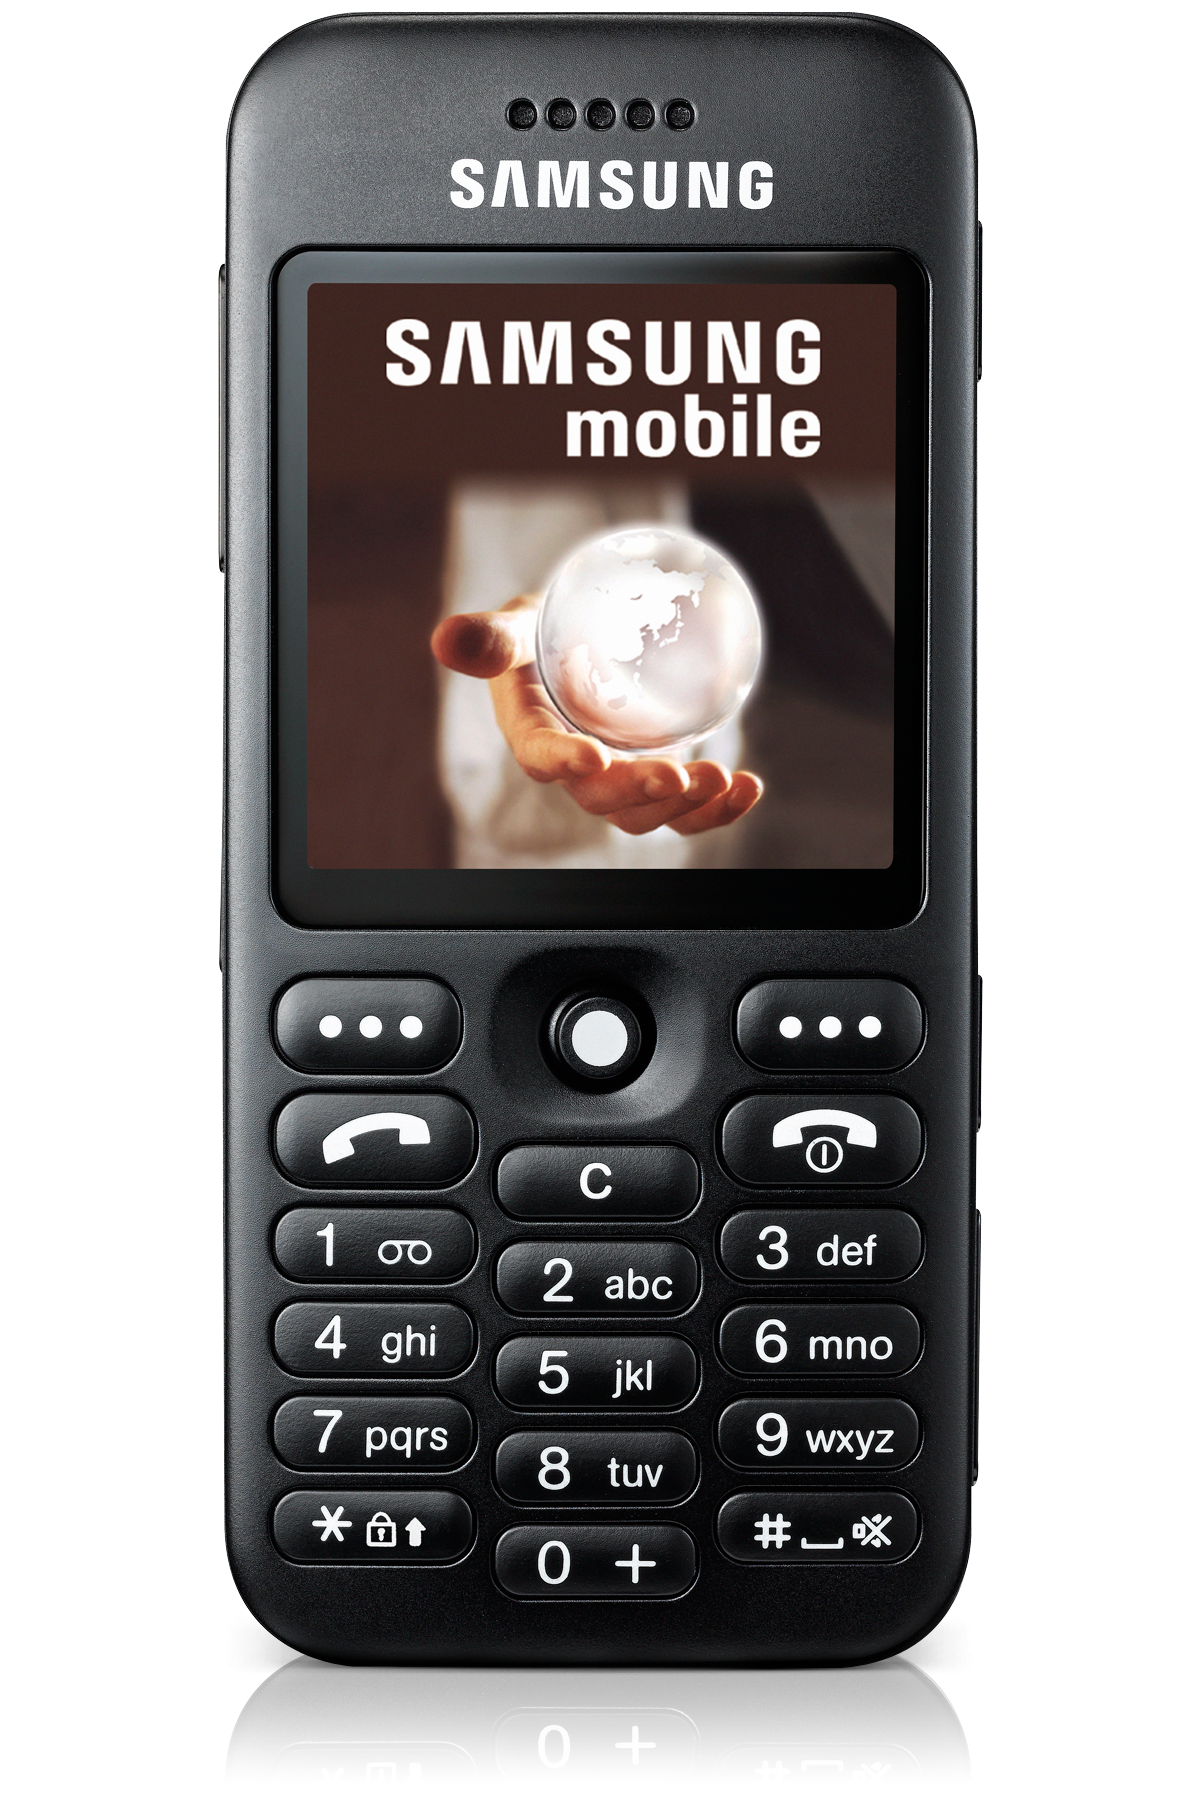 E590 | Samsung Support UK1200 x 1800